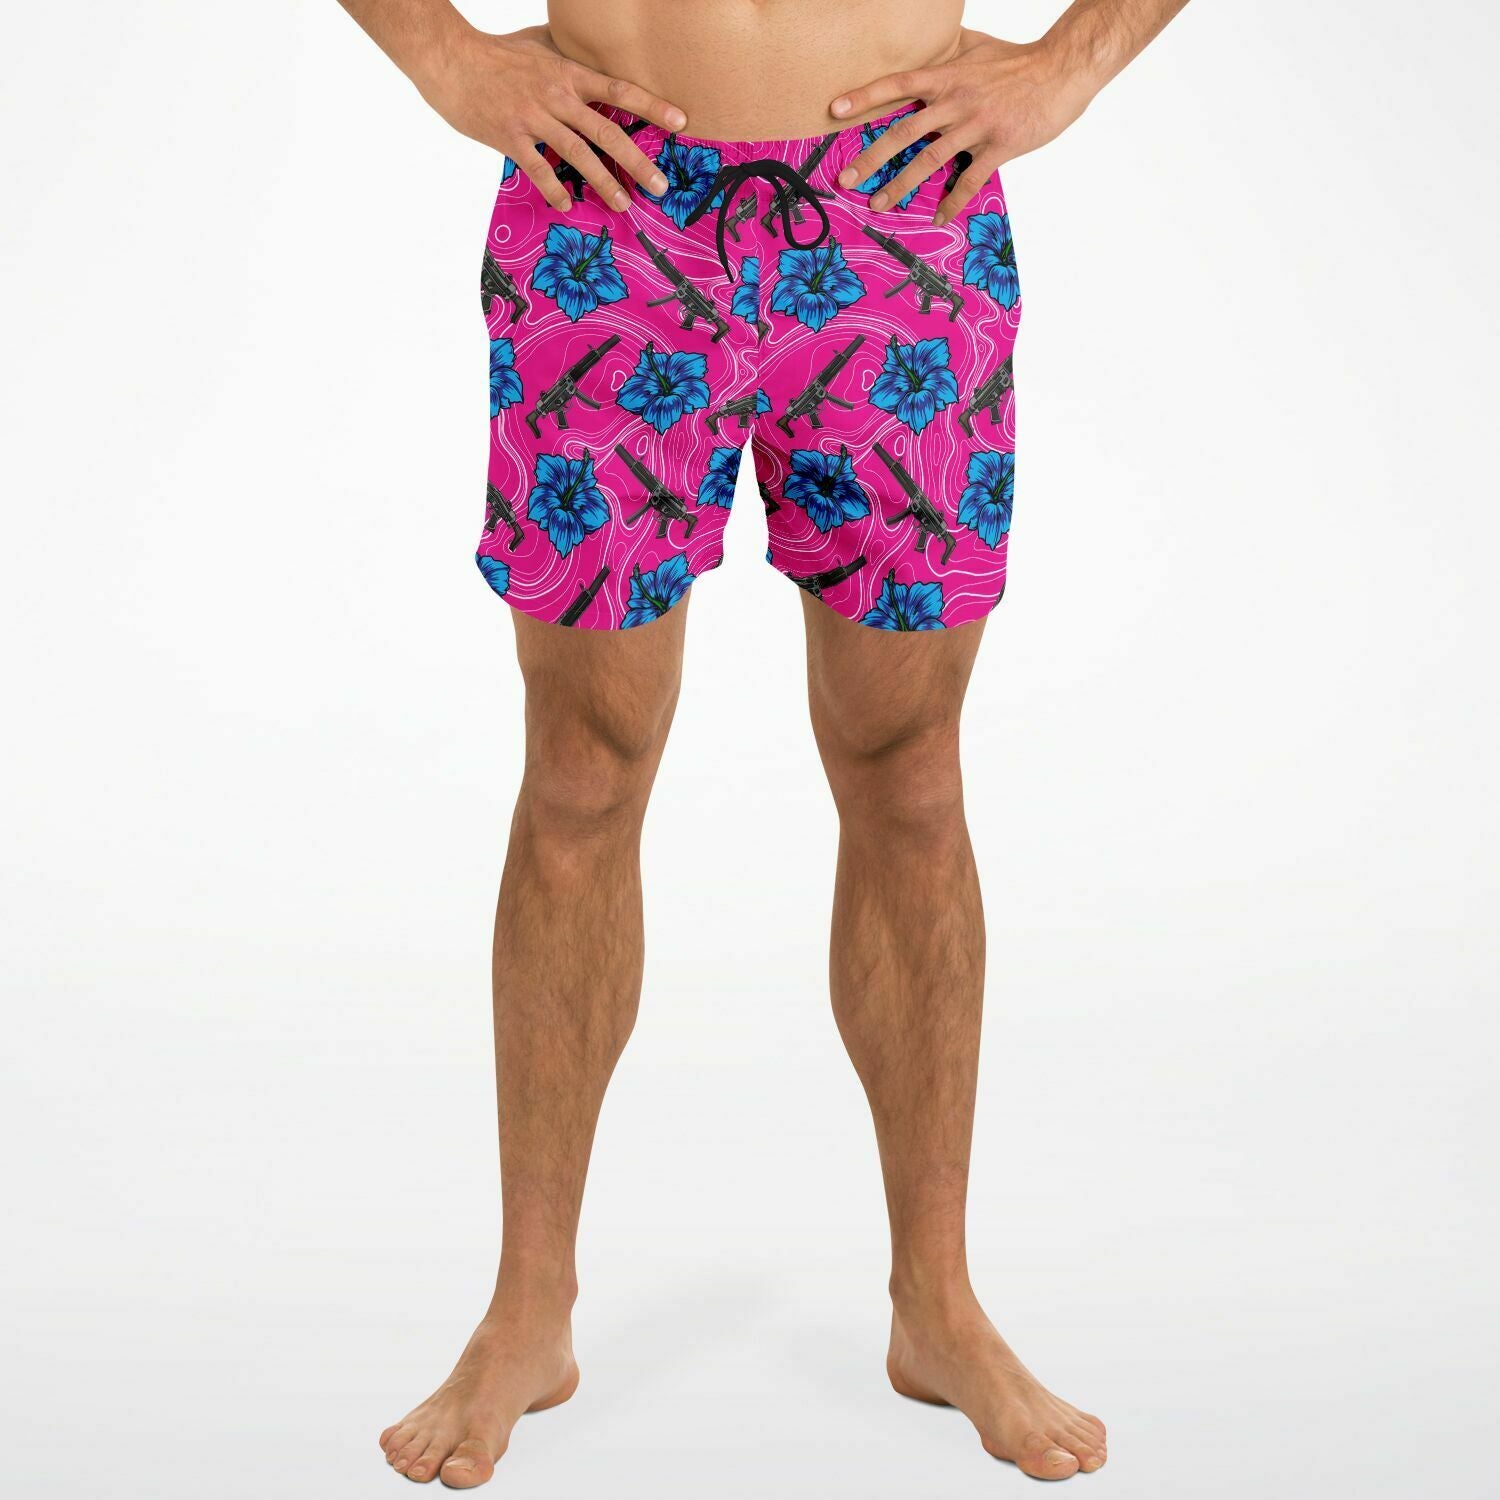 Rad Palm High Capacity Hibiscus Men's Swim Trunks